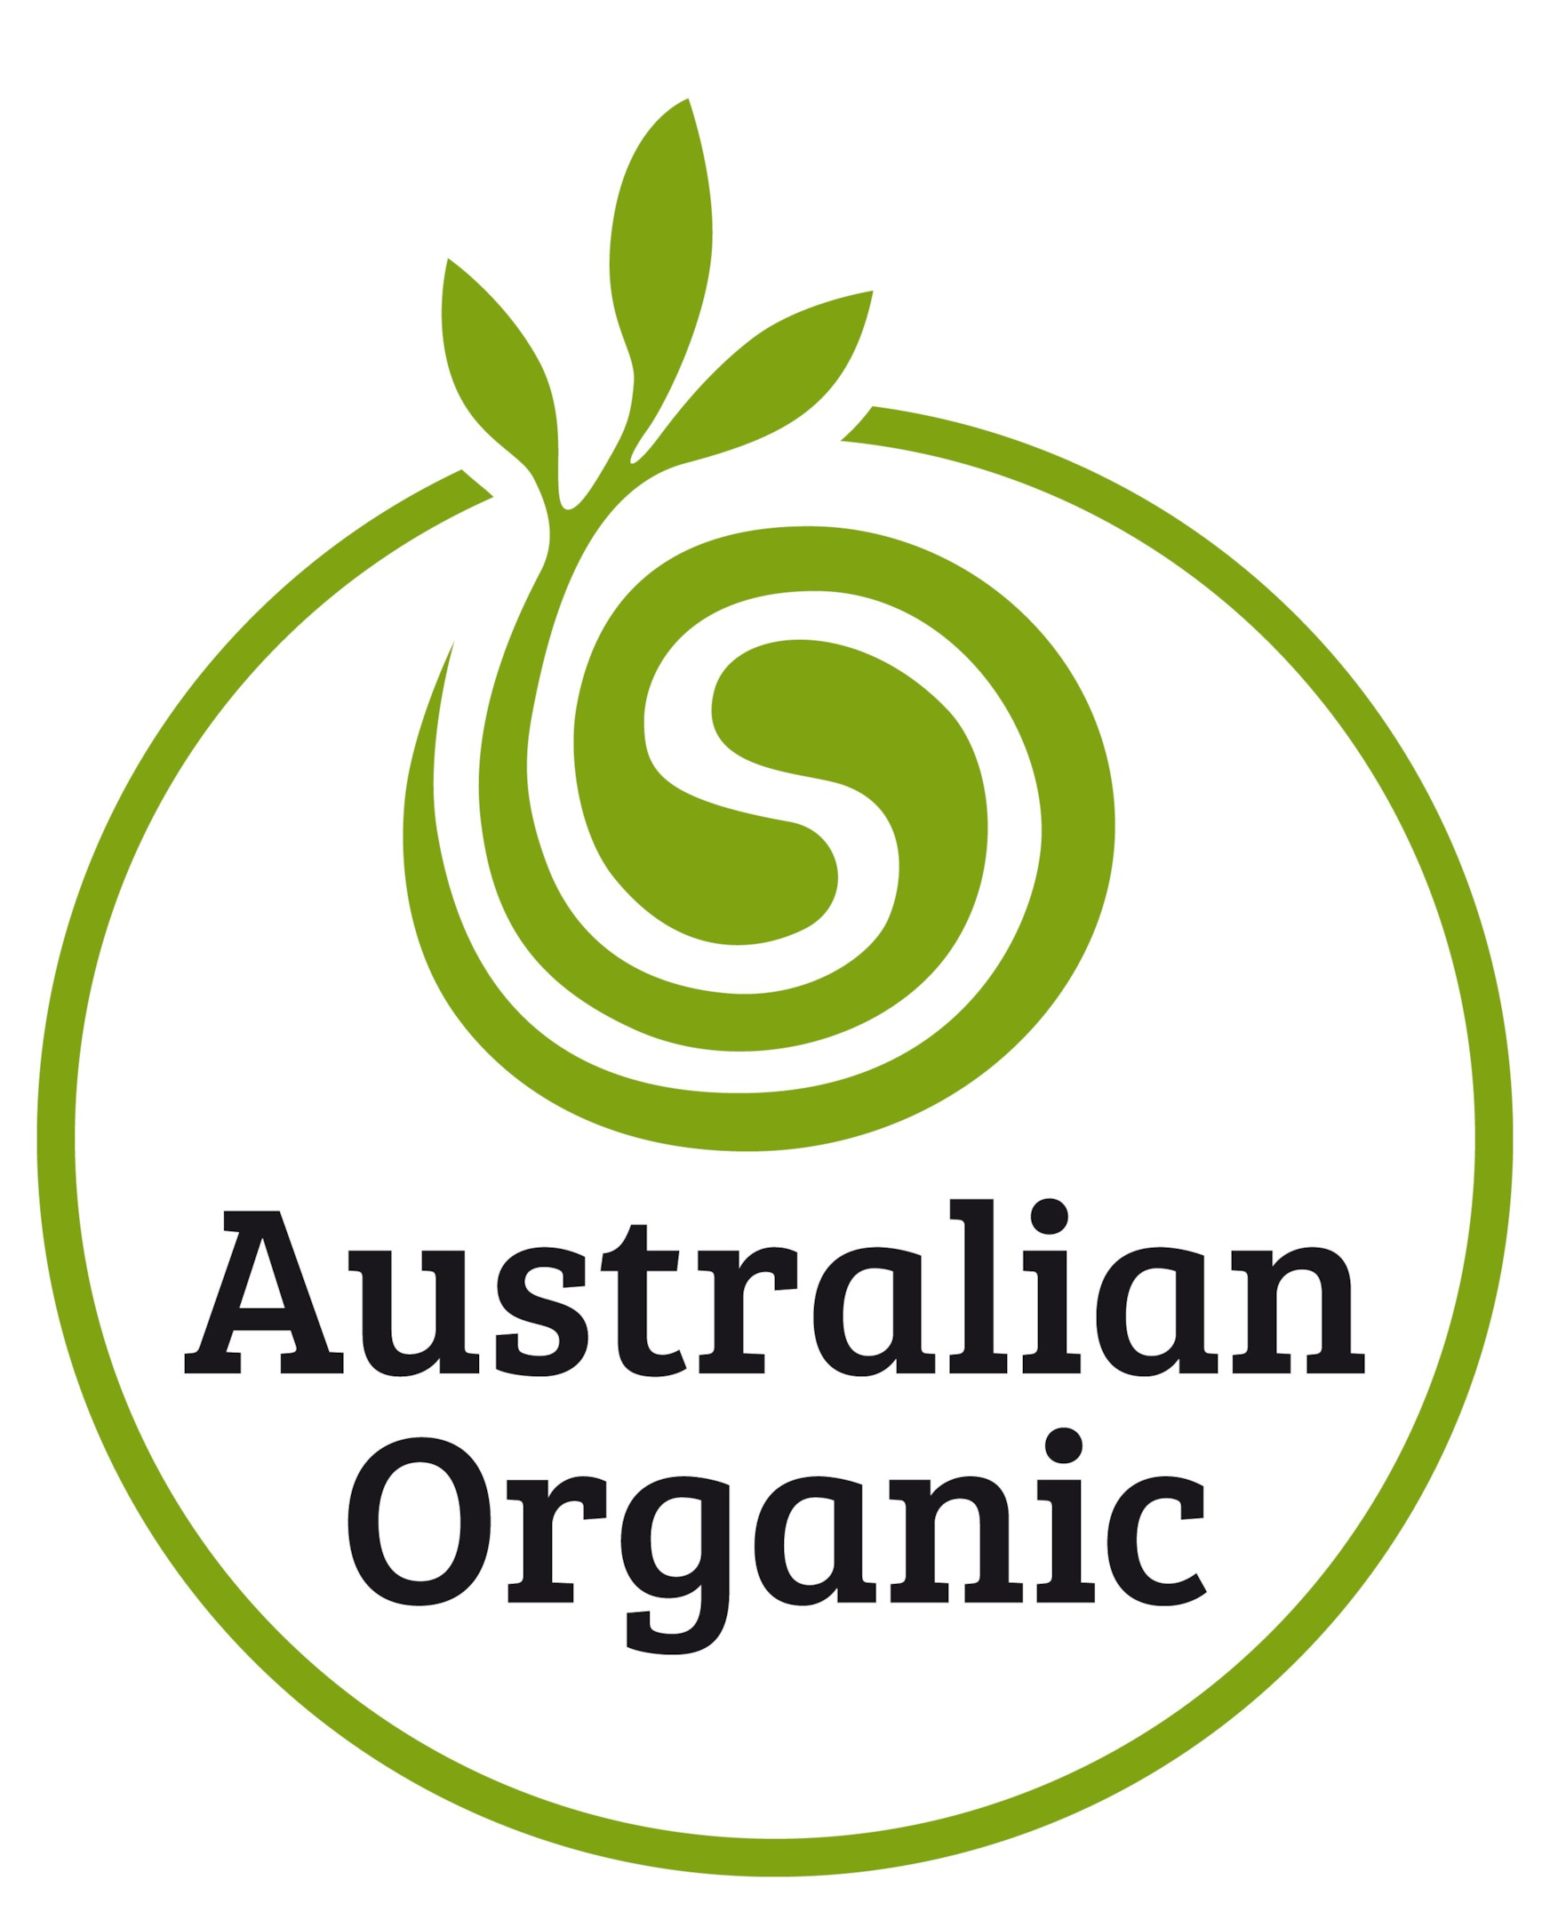 Austrailian Organic food label